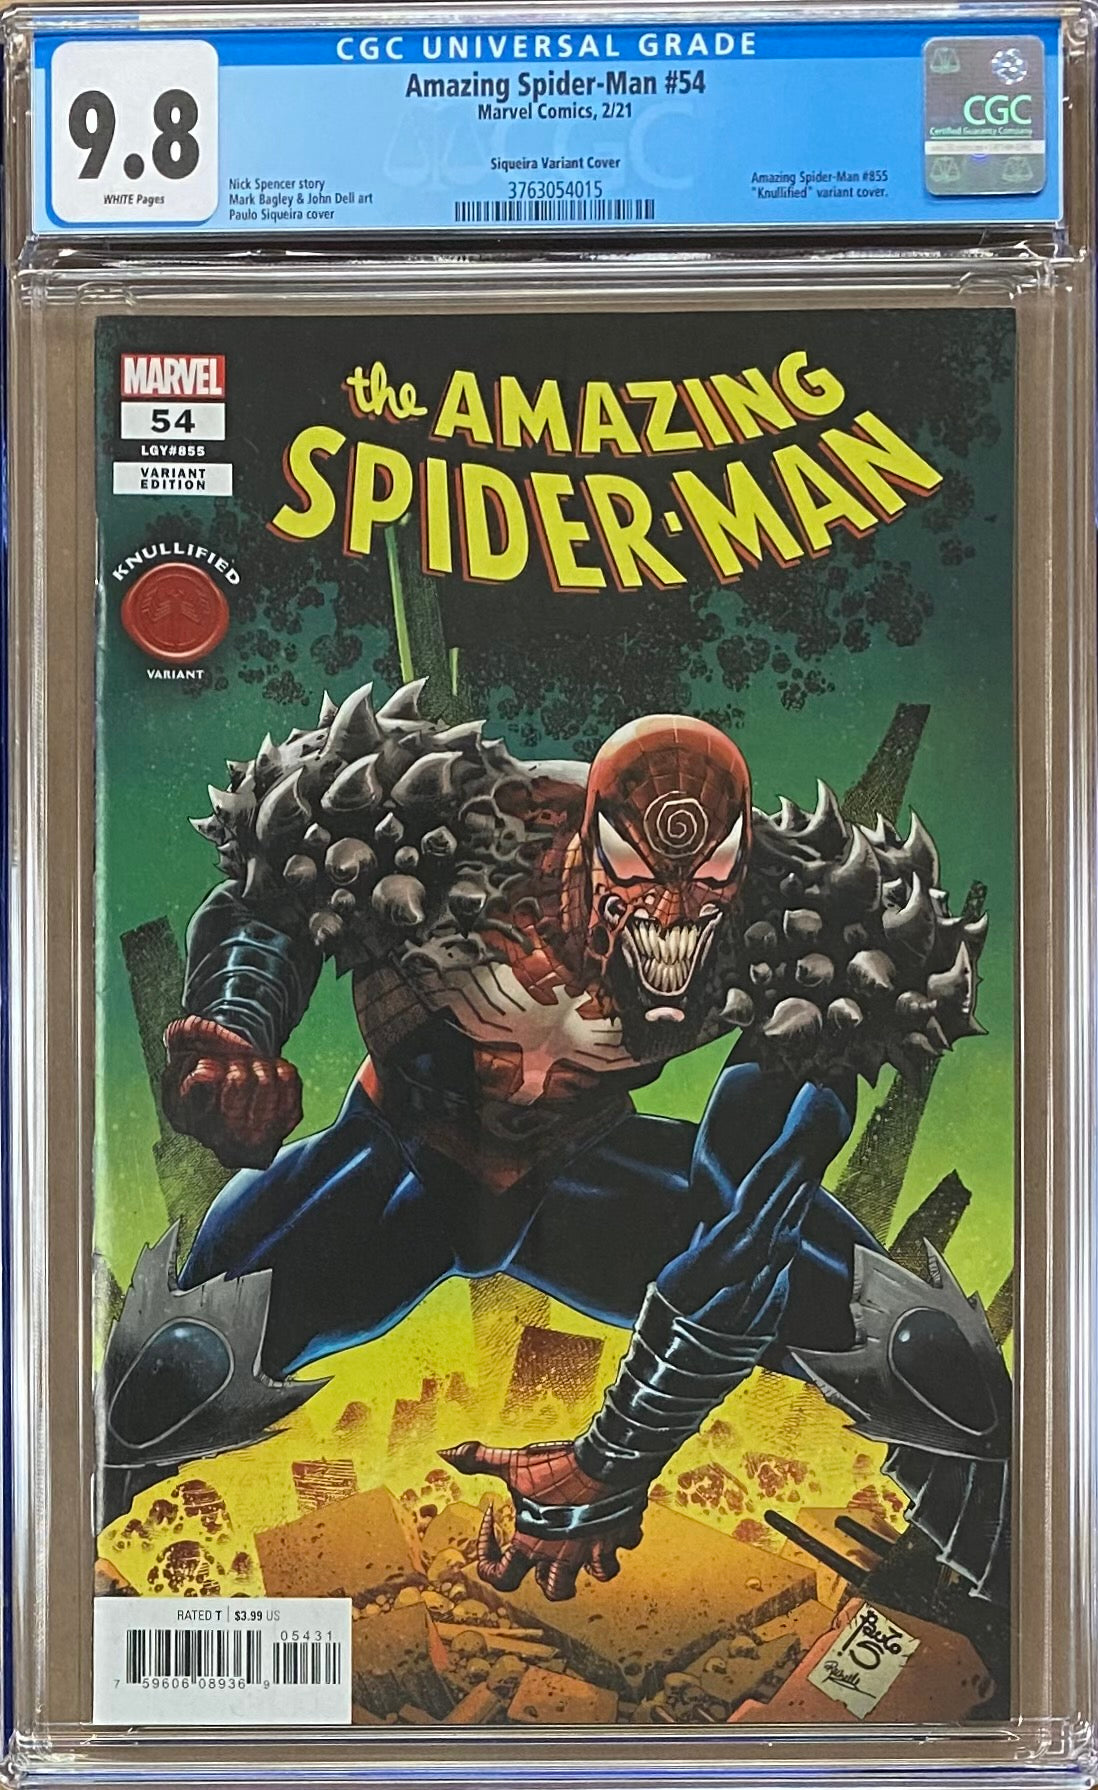 Amazing Spider-Man #54 "Knullified" Variant CGC 9.8